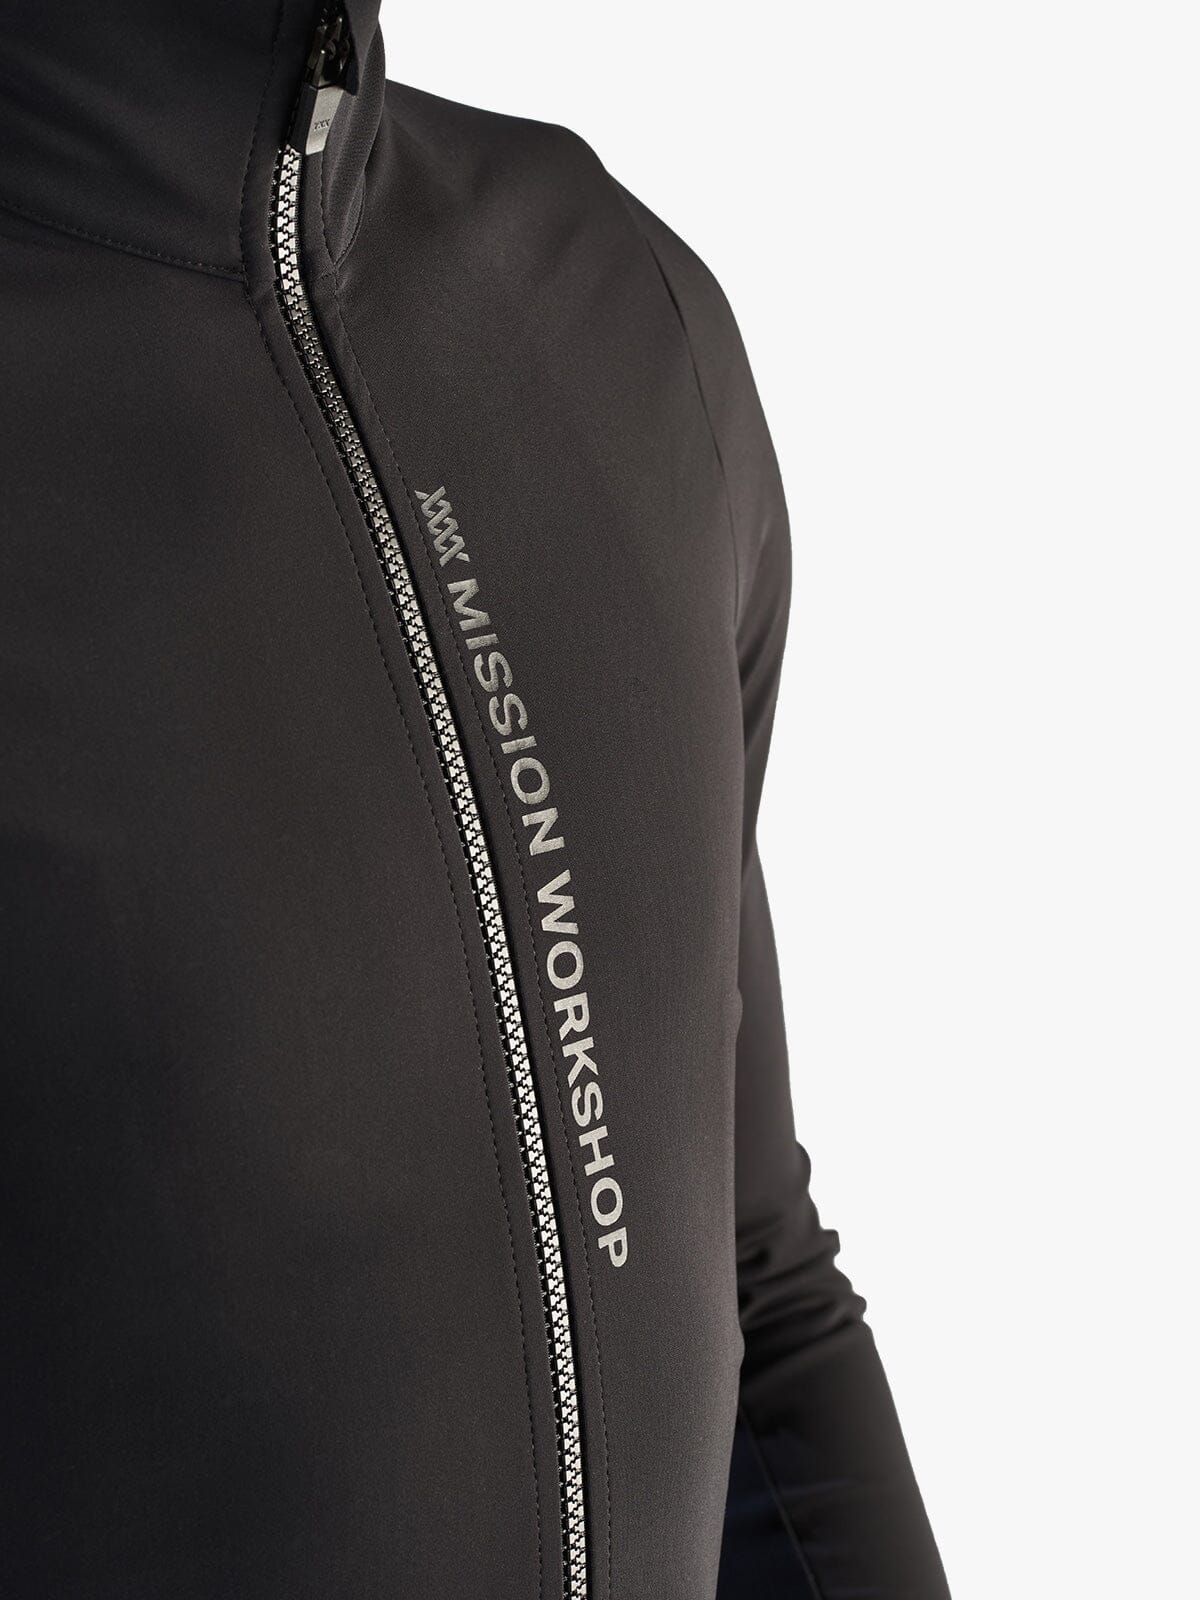 Range Jacket Men's byMission Workshop - 耐候性バッグ＆テクニカルアパレル - サンフランシスコ＆ロサンゼルス - 耐久性に優れた作り - 永久保証